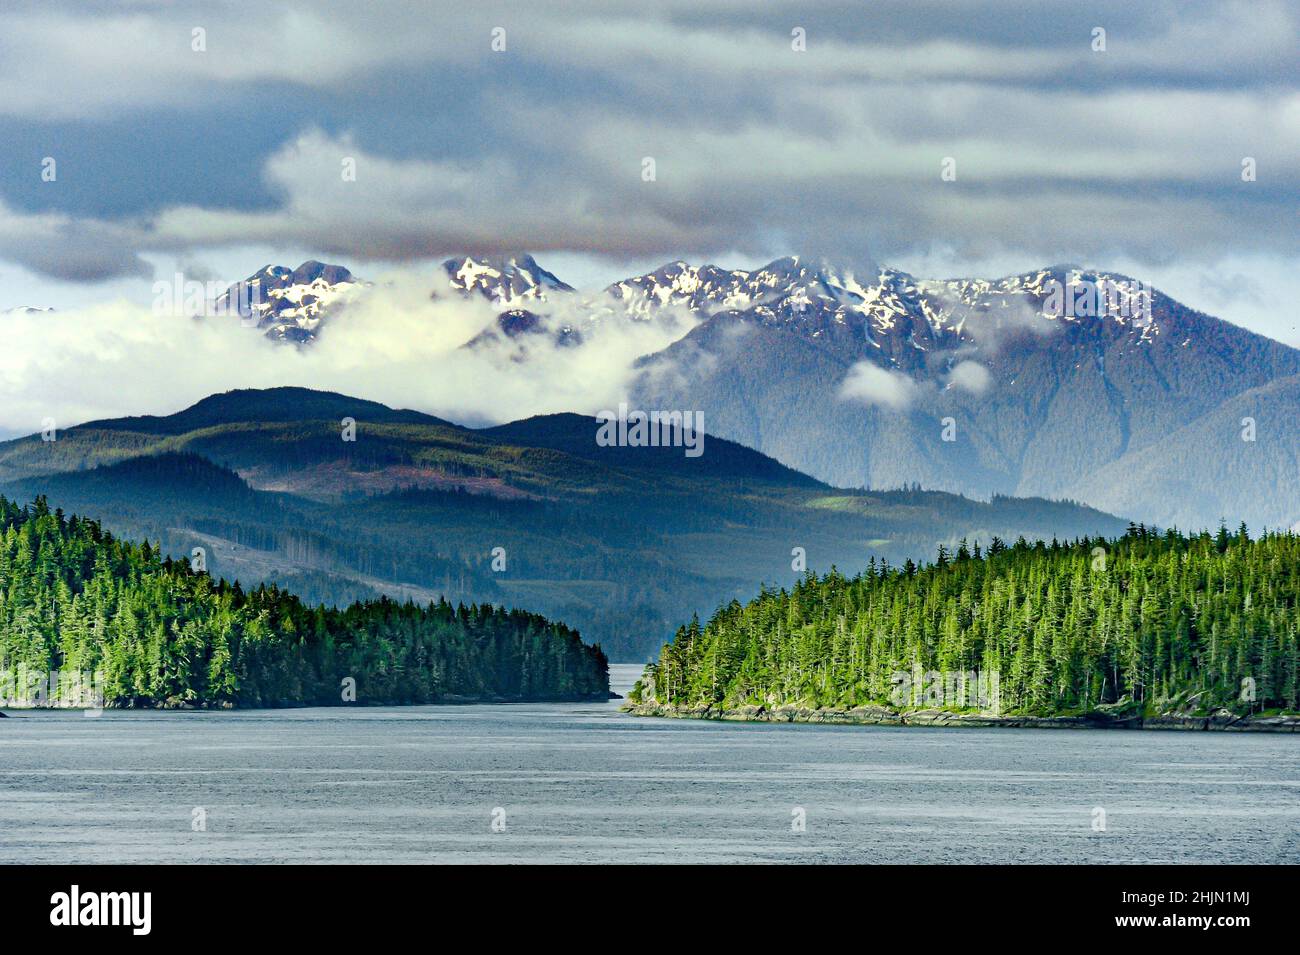 Inside Passage Alaska Pacific Northwest USA - North American Fjordland - Alaska Cruise - Alaskan Mountains Stockfoto